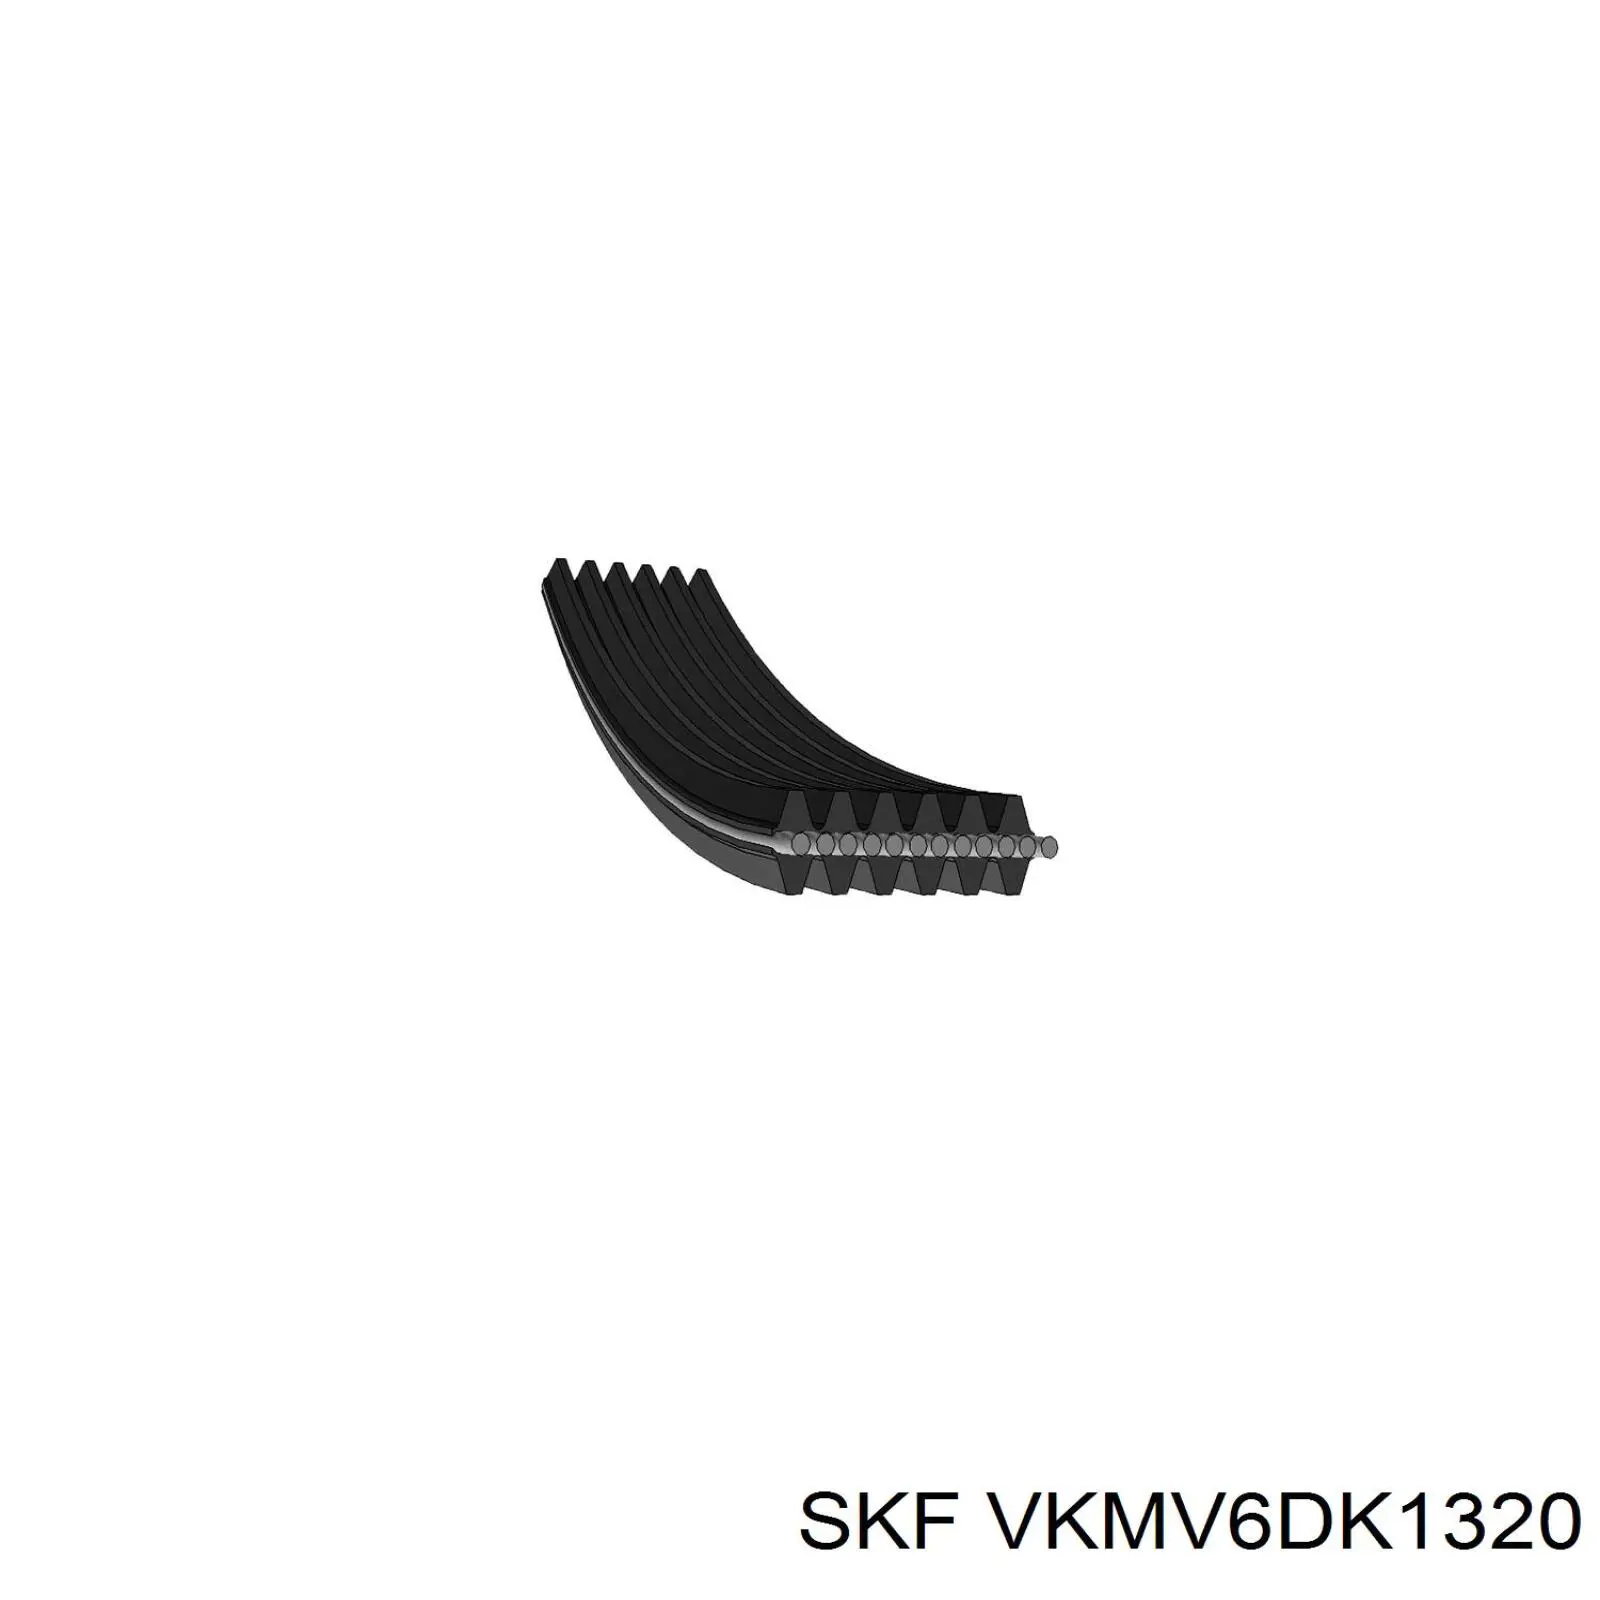 VKMV6DK1320 SKF correa trapezoidal